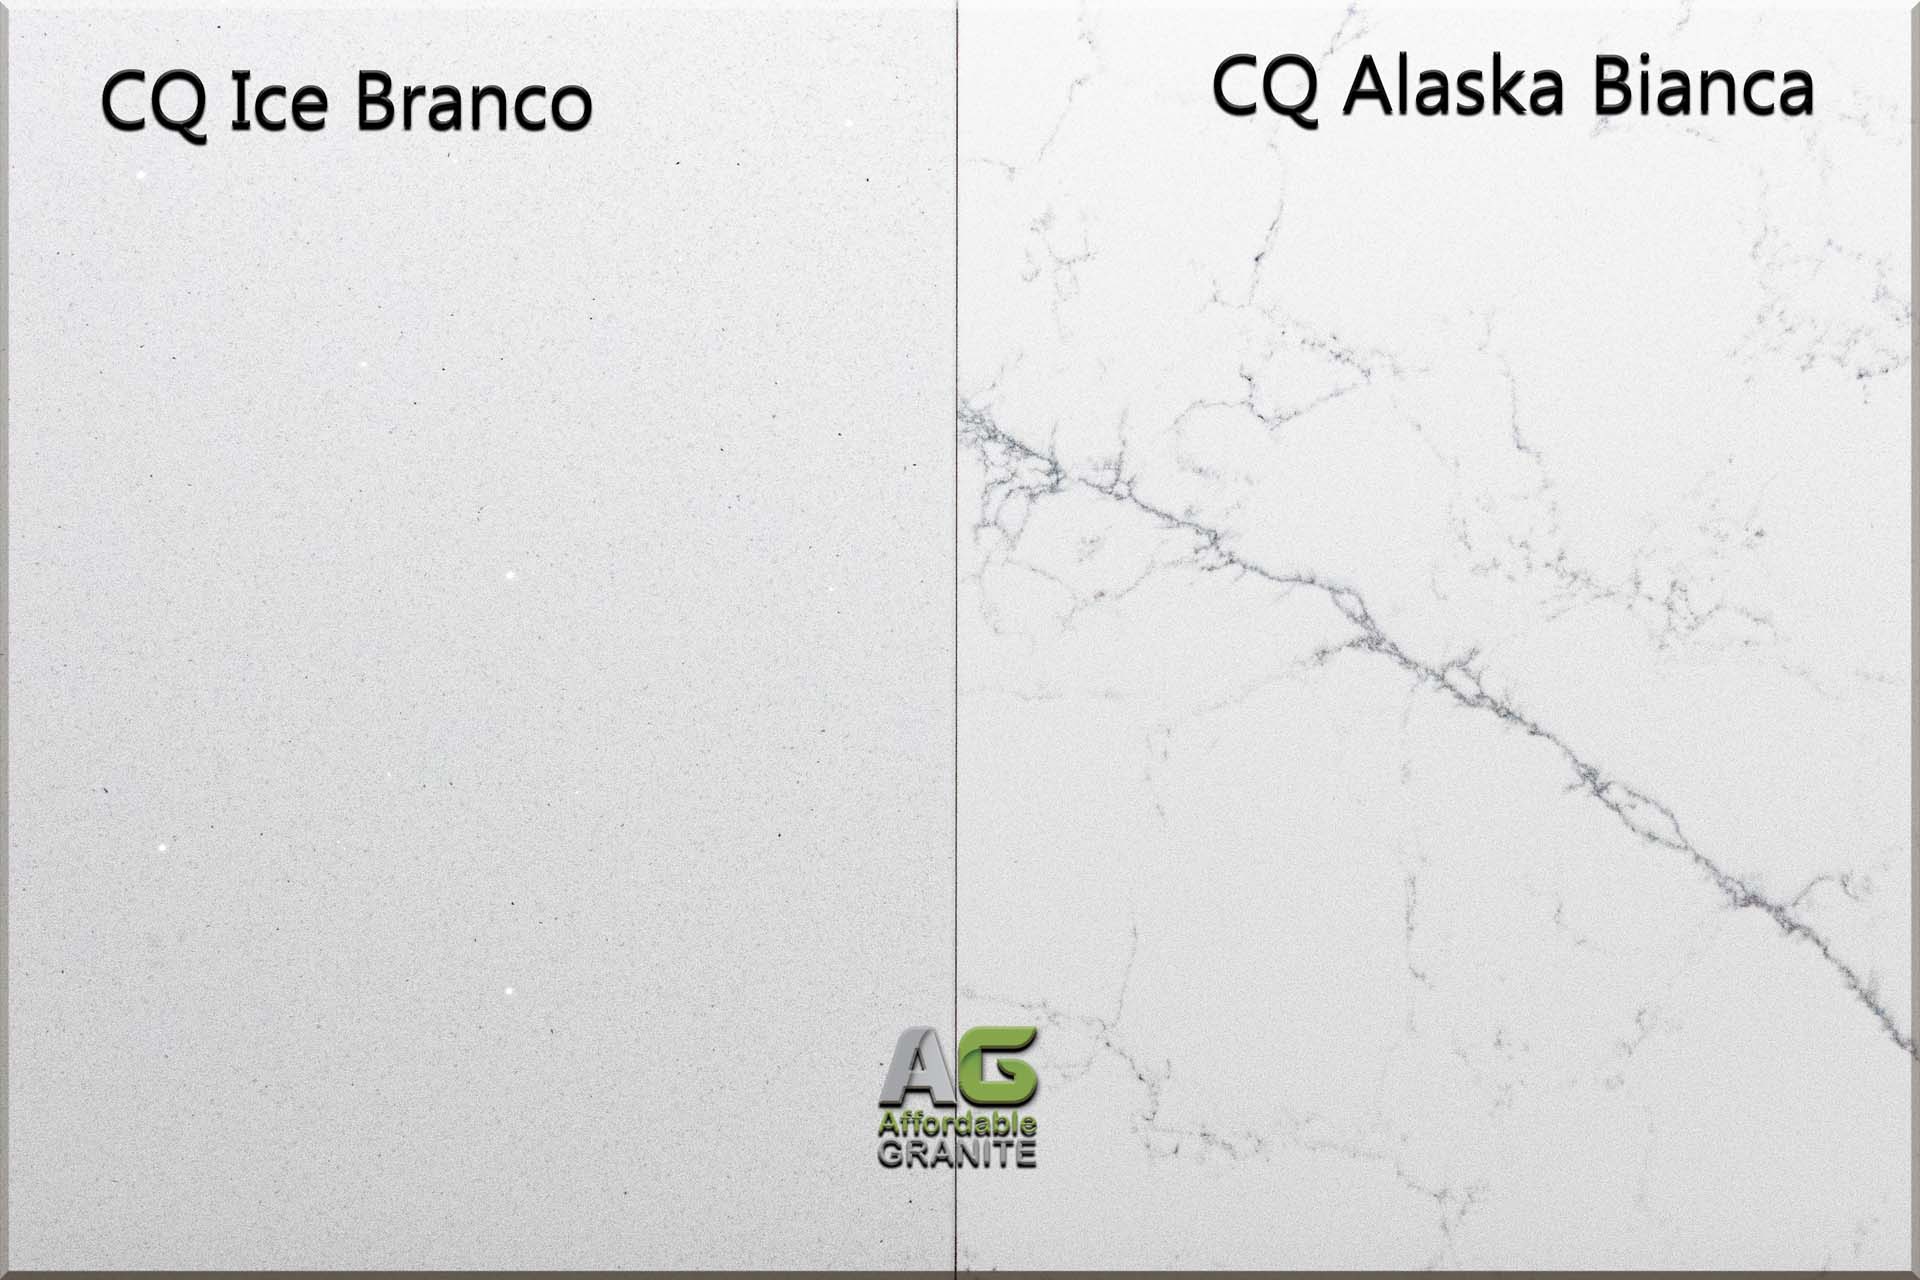 Classic Quartz special offer Alaska Bianca Ice Branco 190930